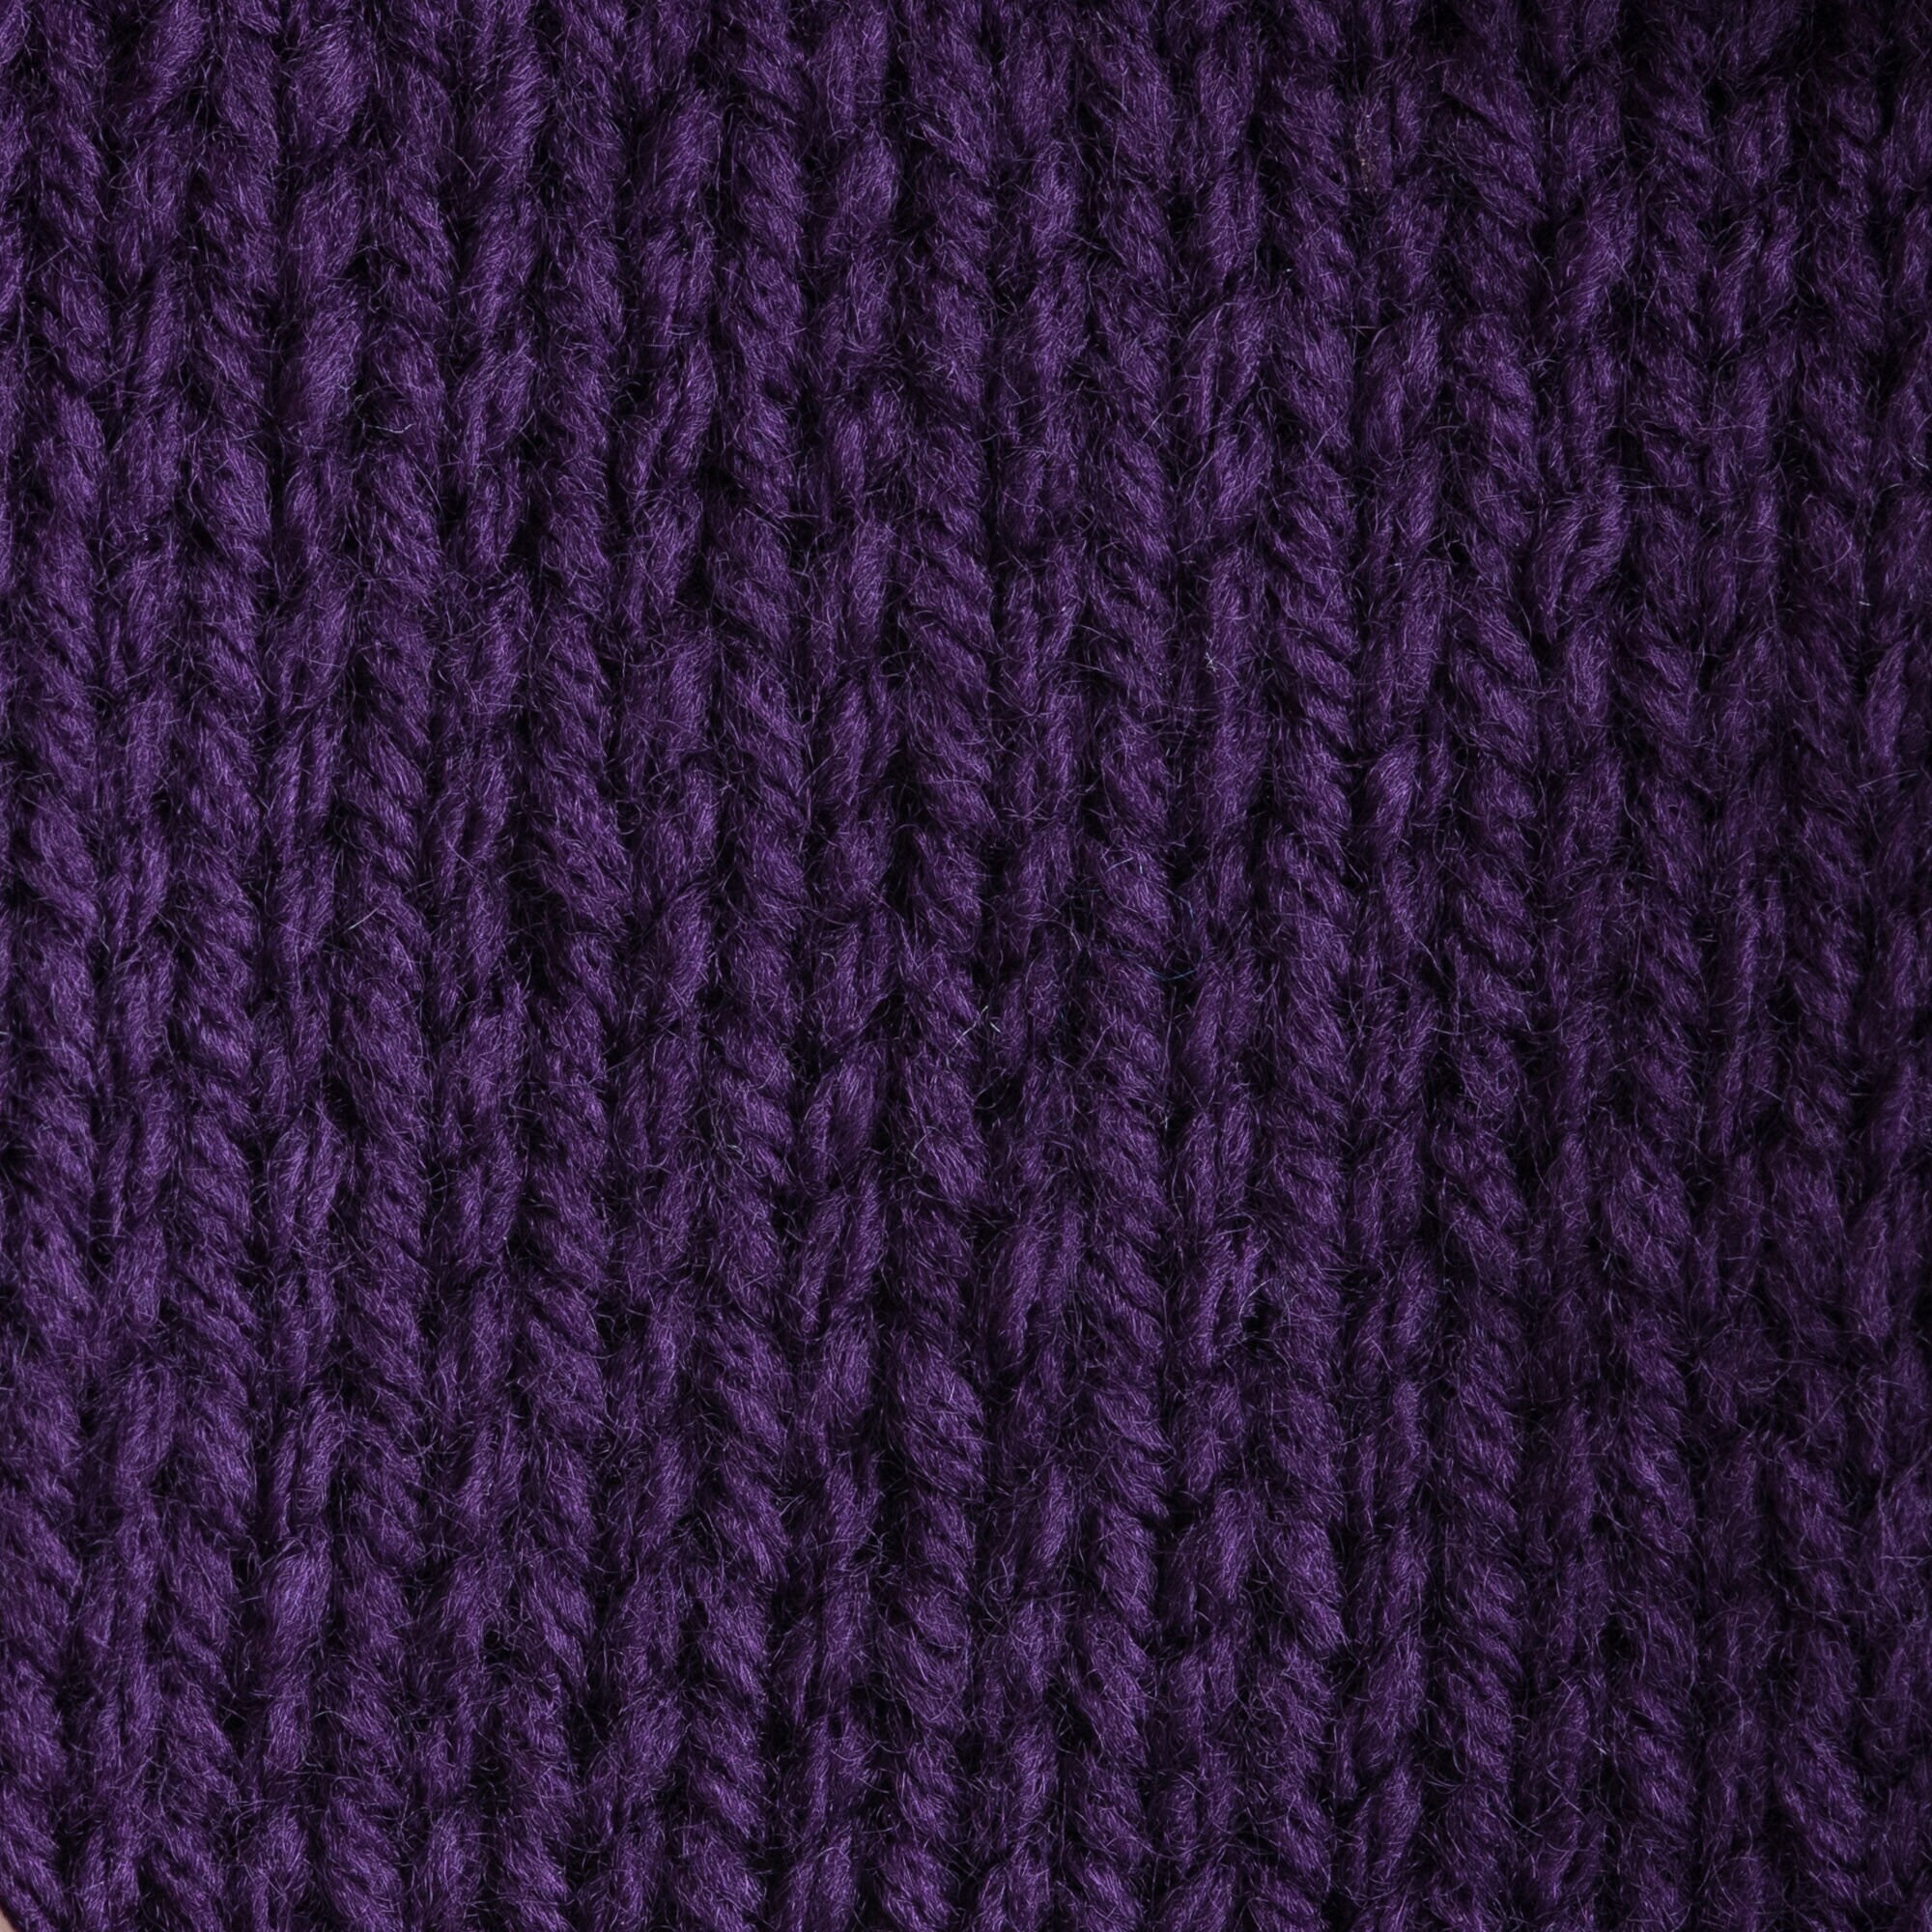 Bernat Super Value Acrylic Knitting Crocheting Craft Yarn 